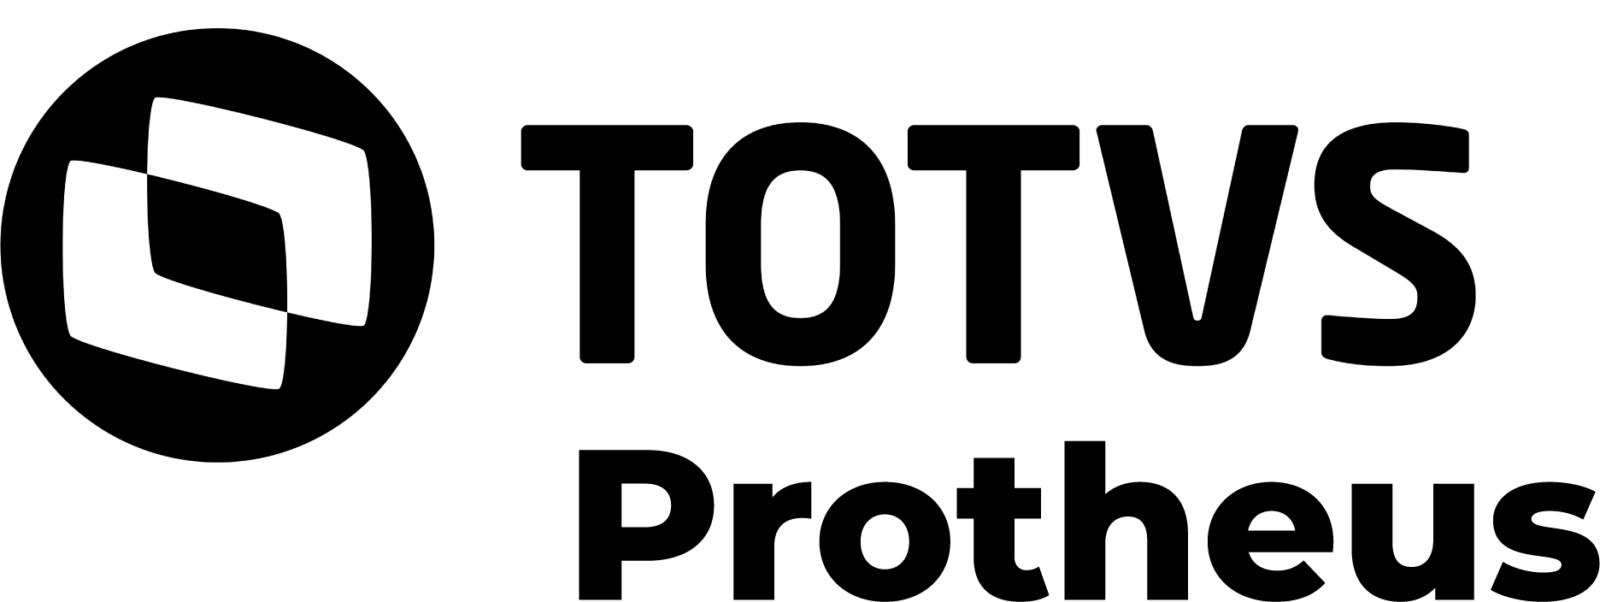 Totvs protheus